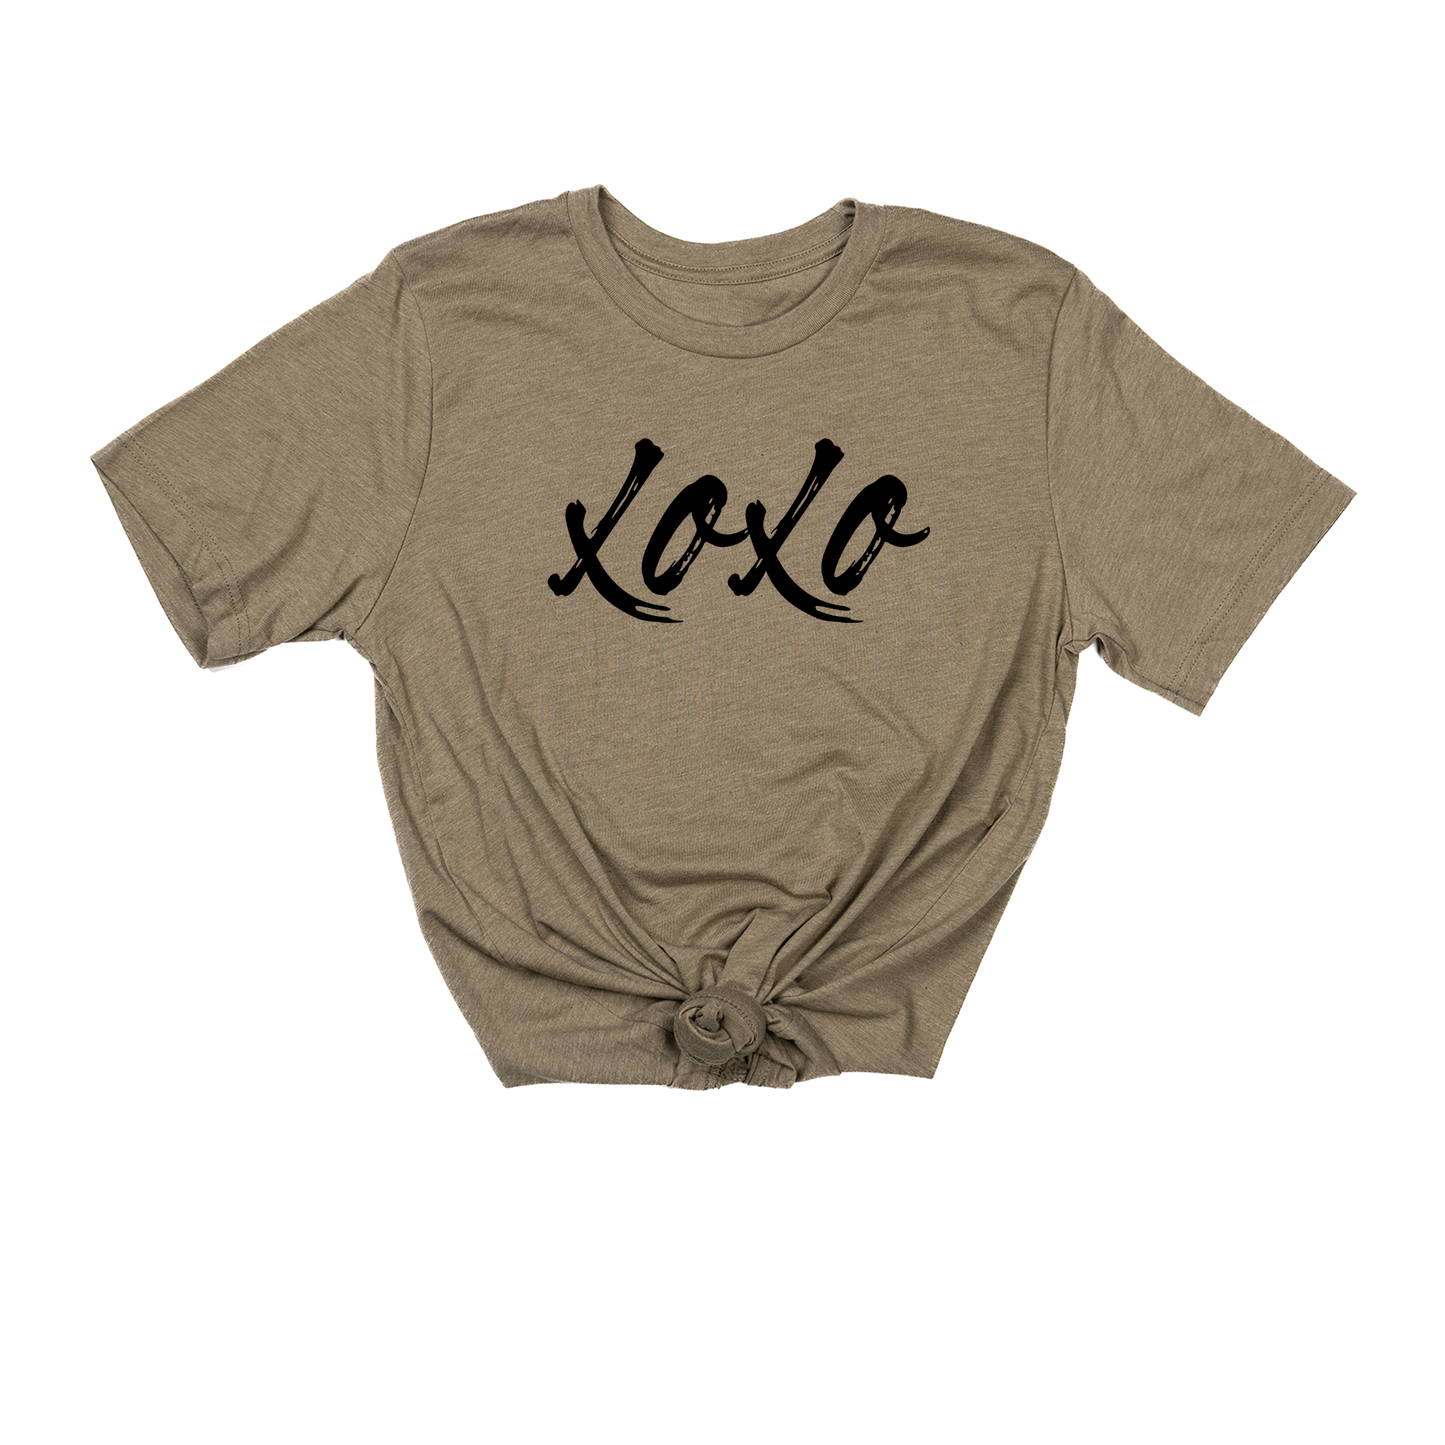 XOXO (Handwritten,  Across Front) - Tee (Olive)